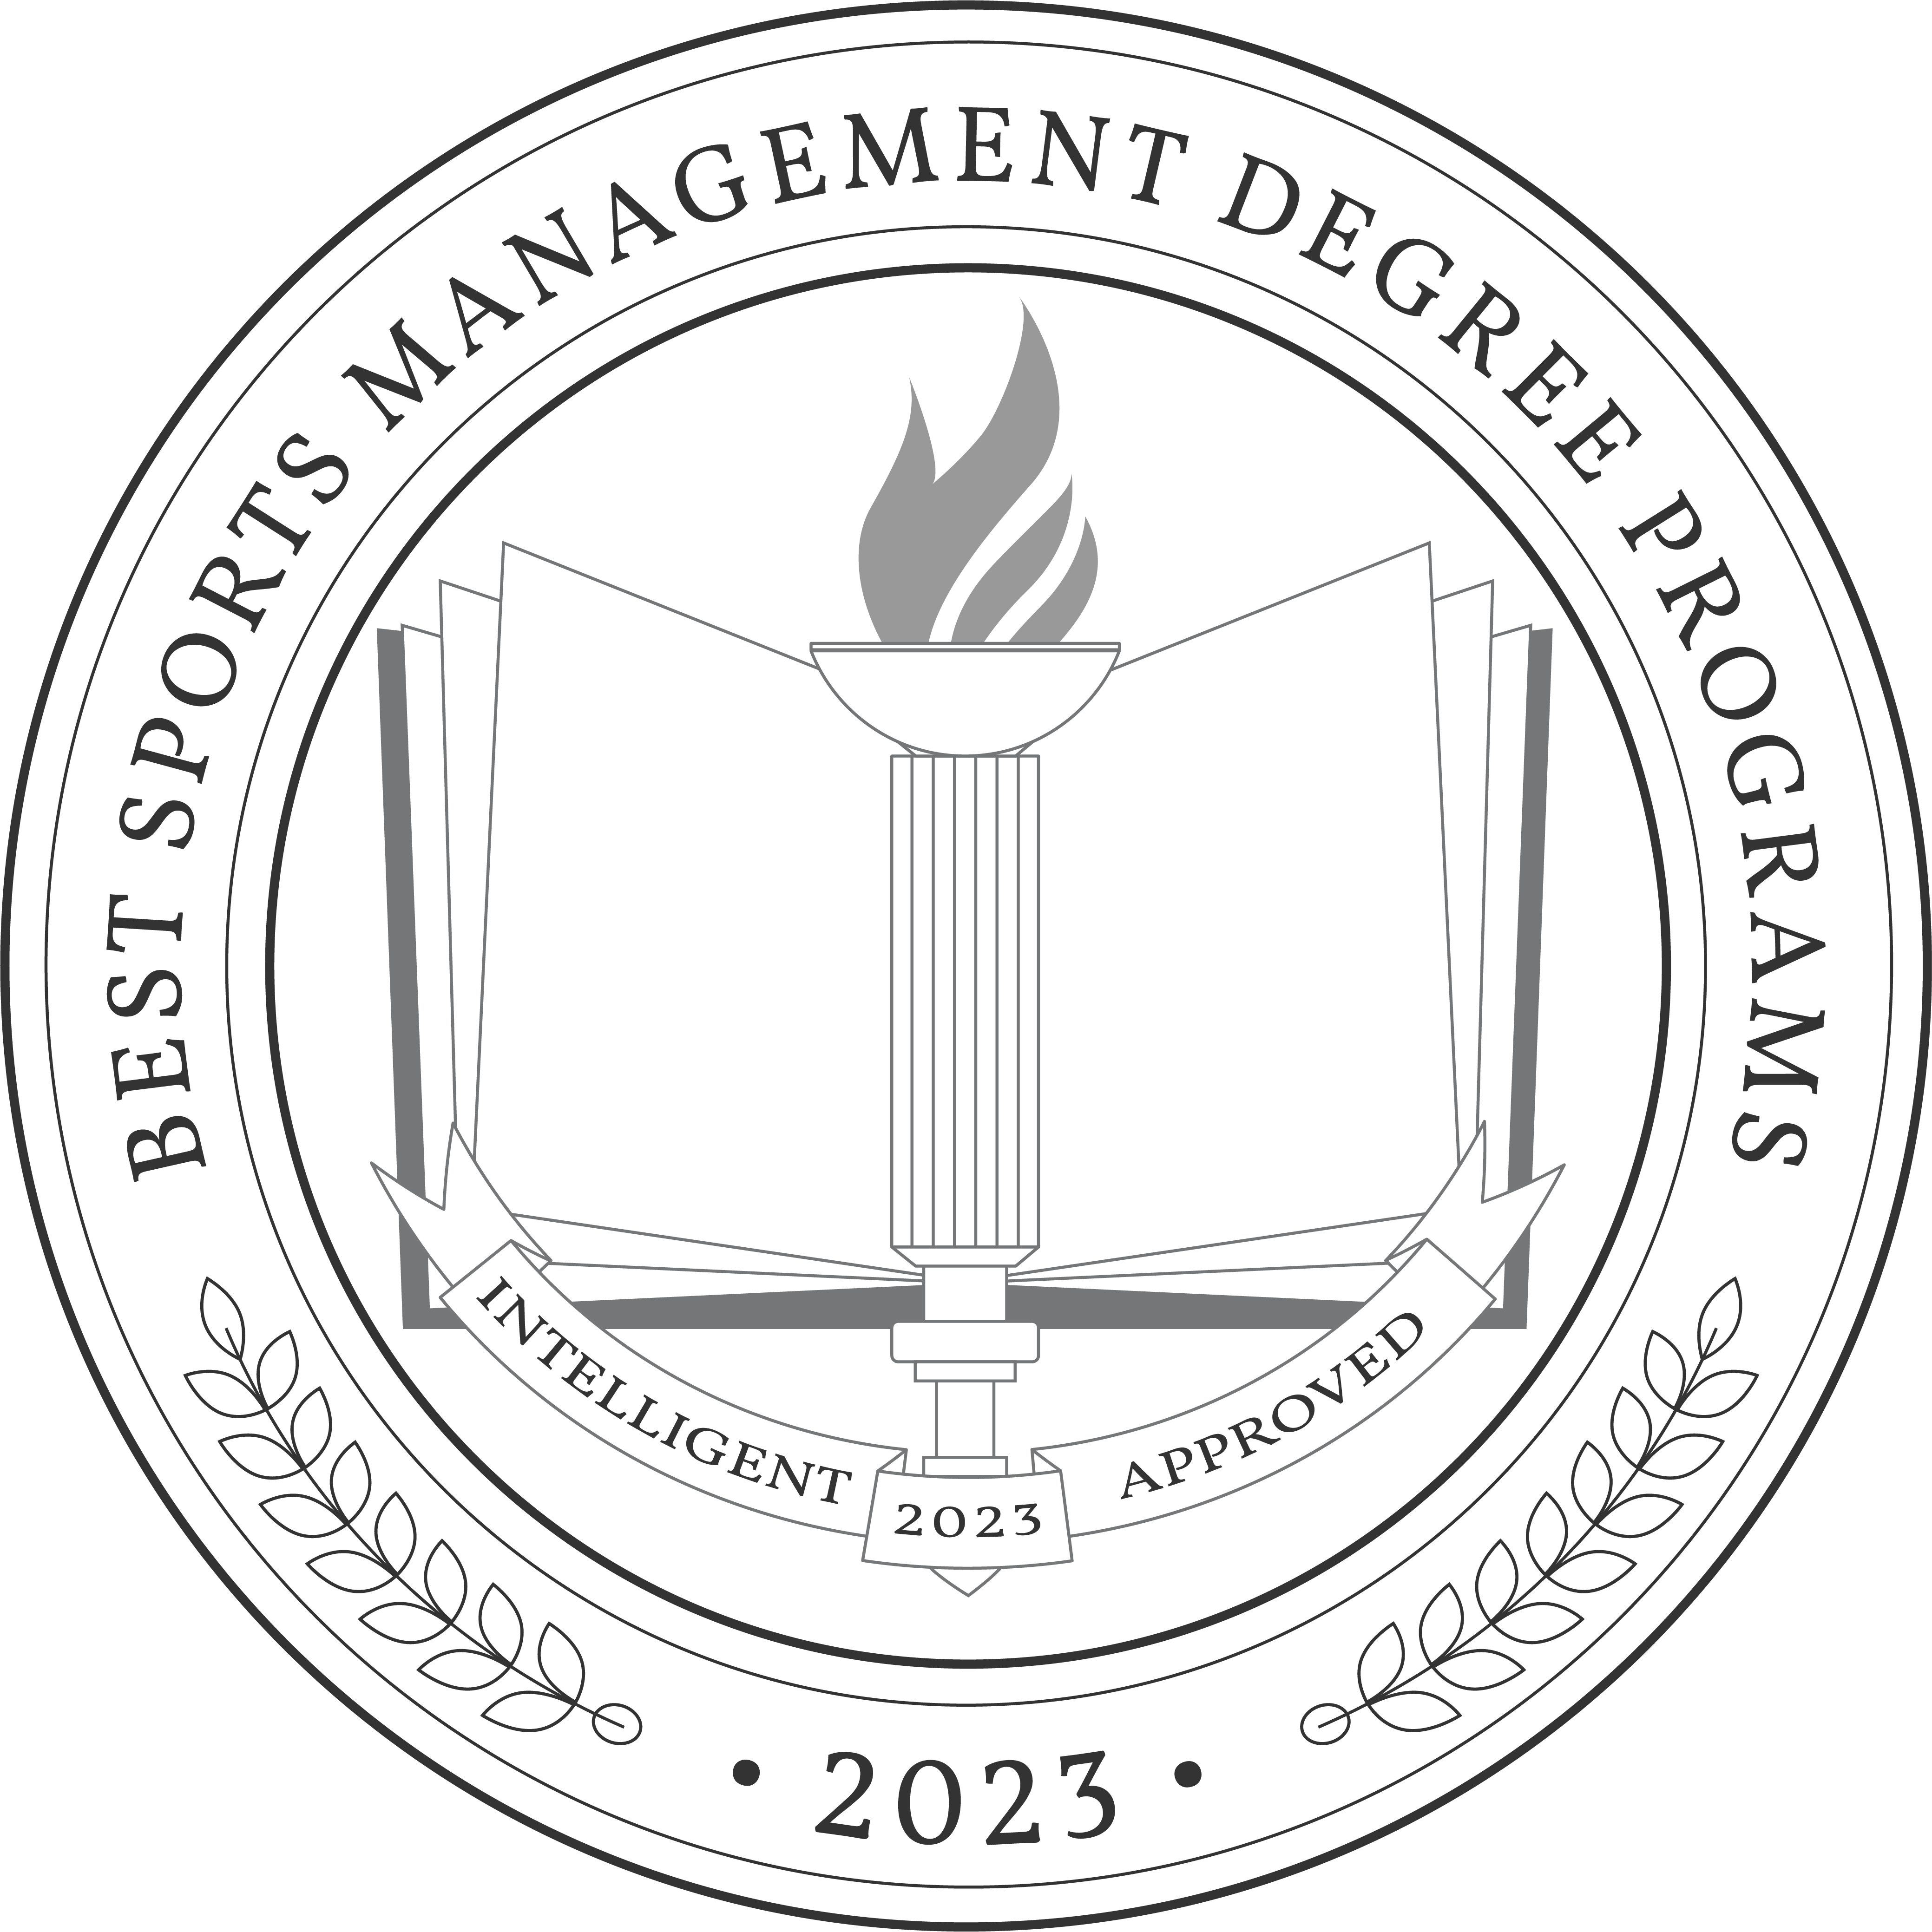 Best Sports Management Degree Programs 2023